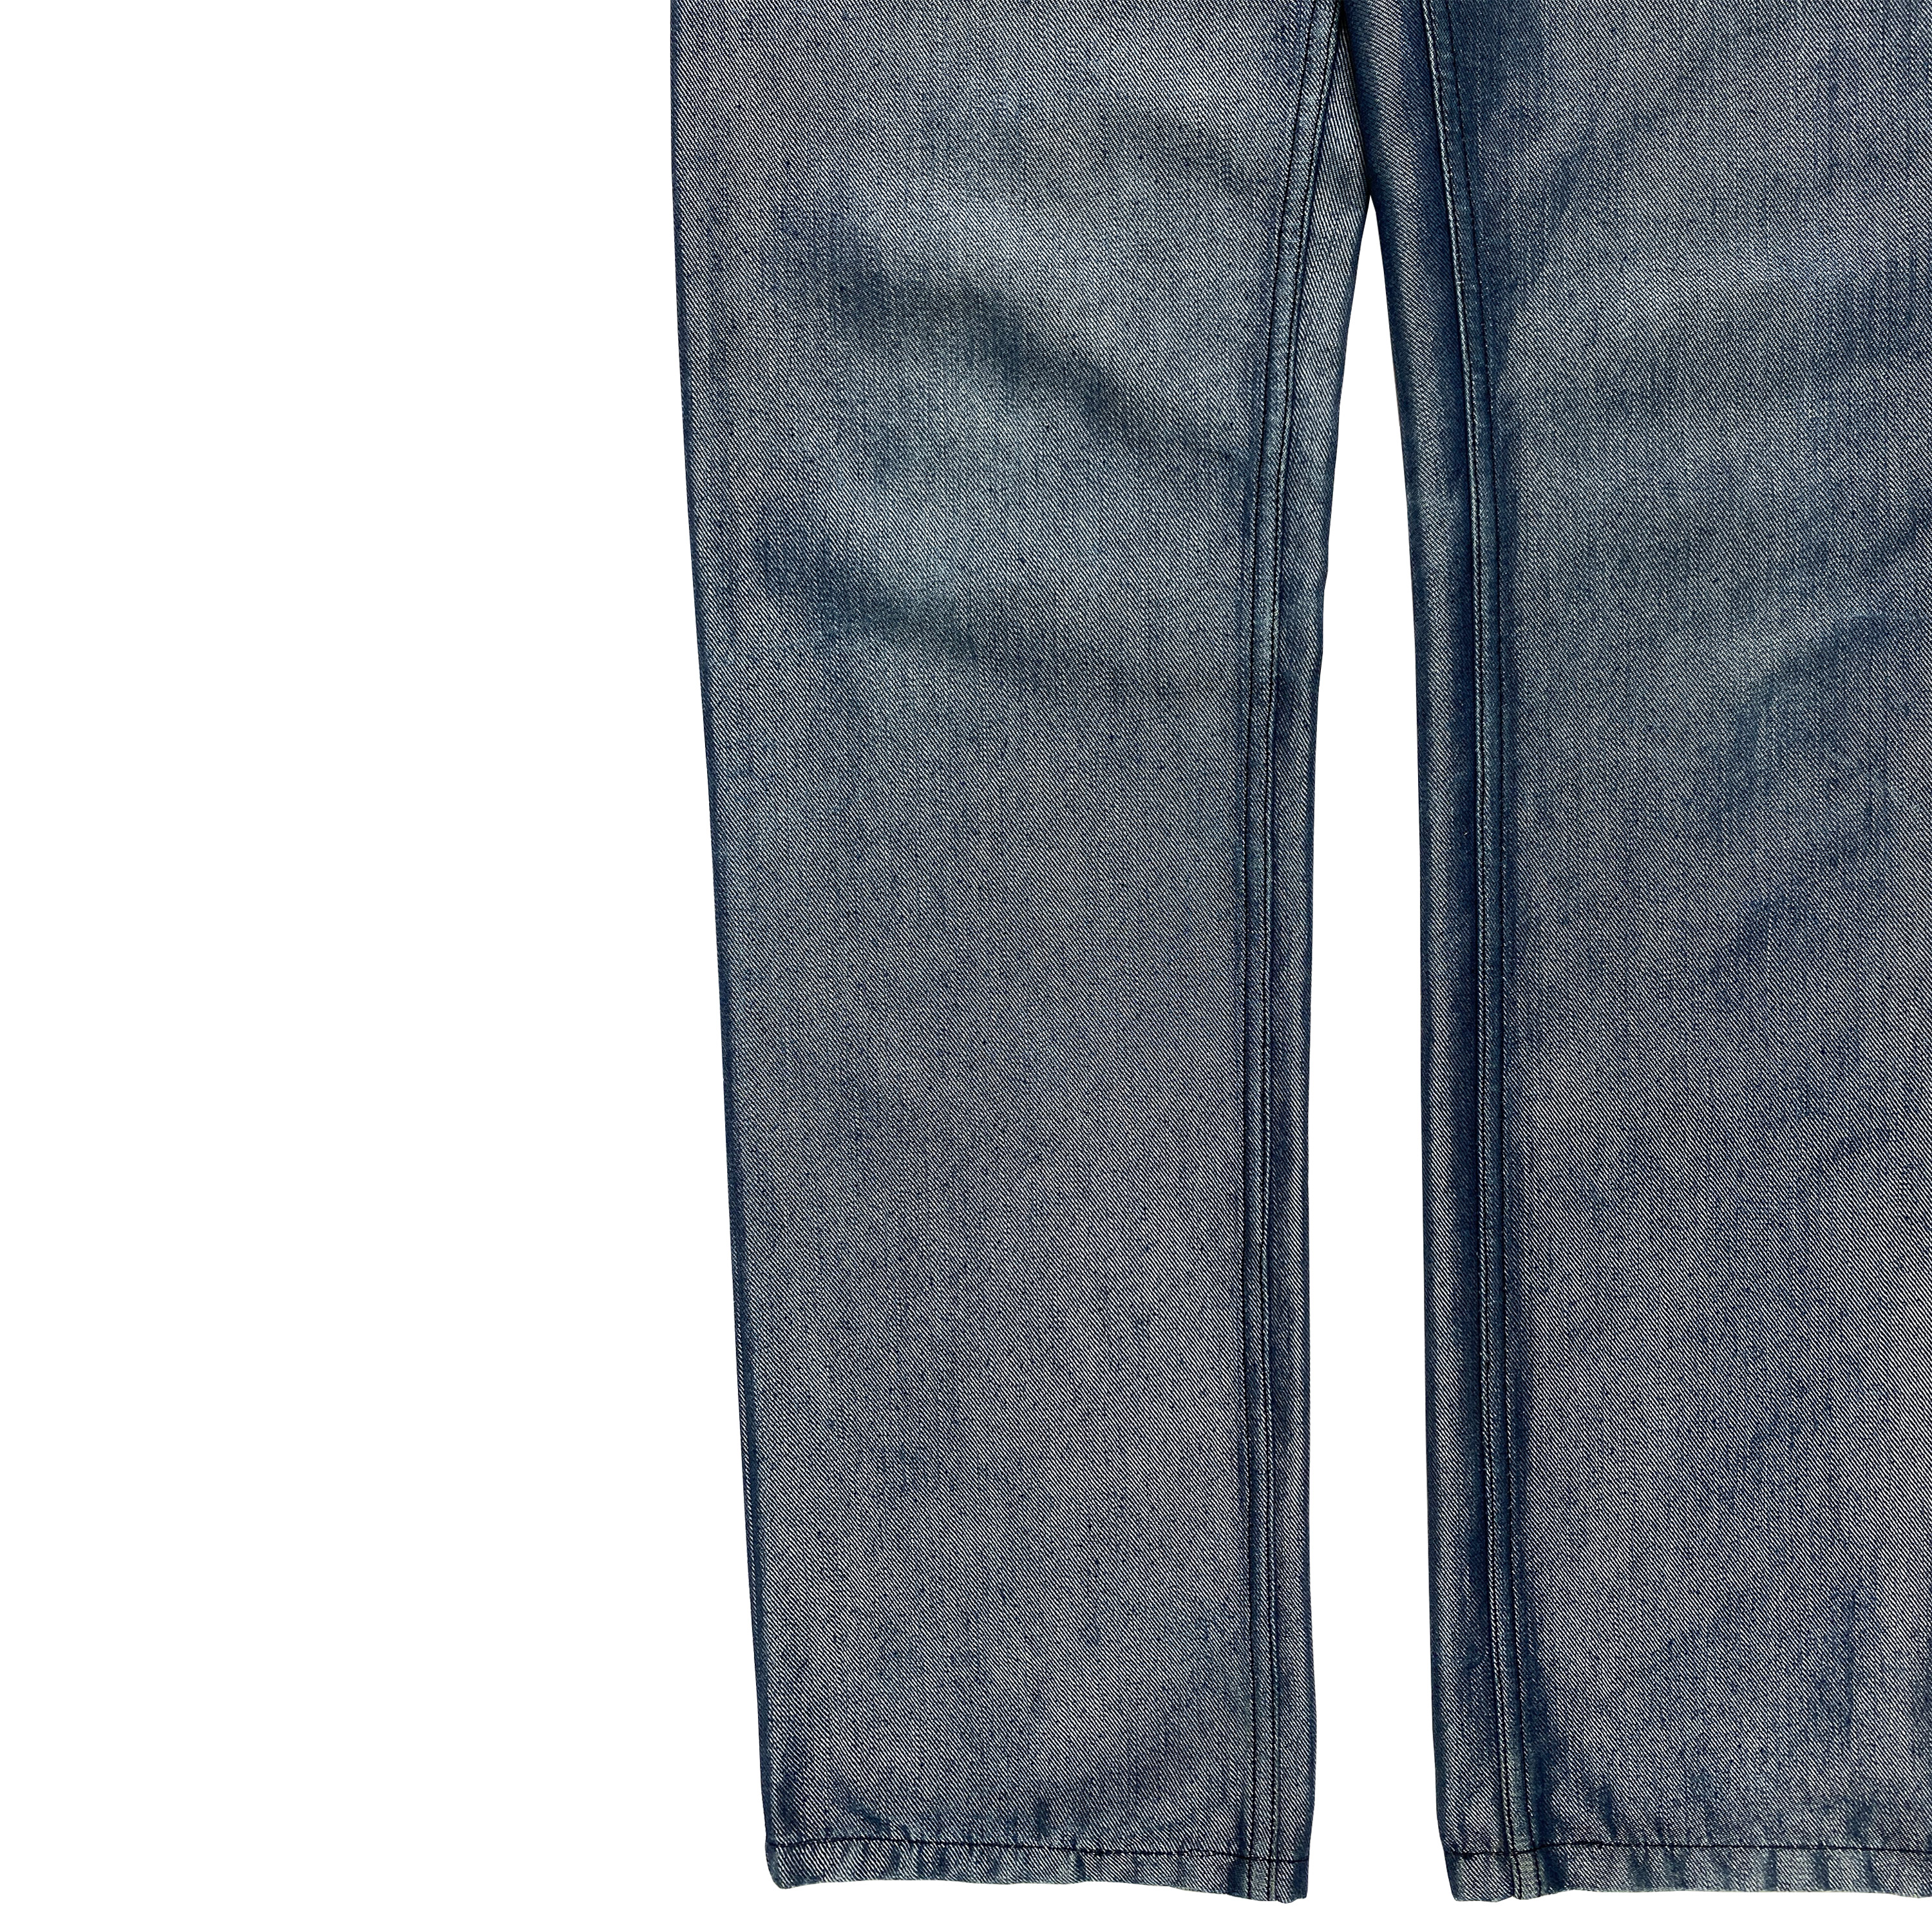 Helmut Lang, A/W 1997-98 Polypropylene Coated Denim Jeans - La 